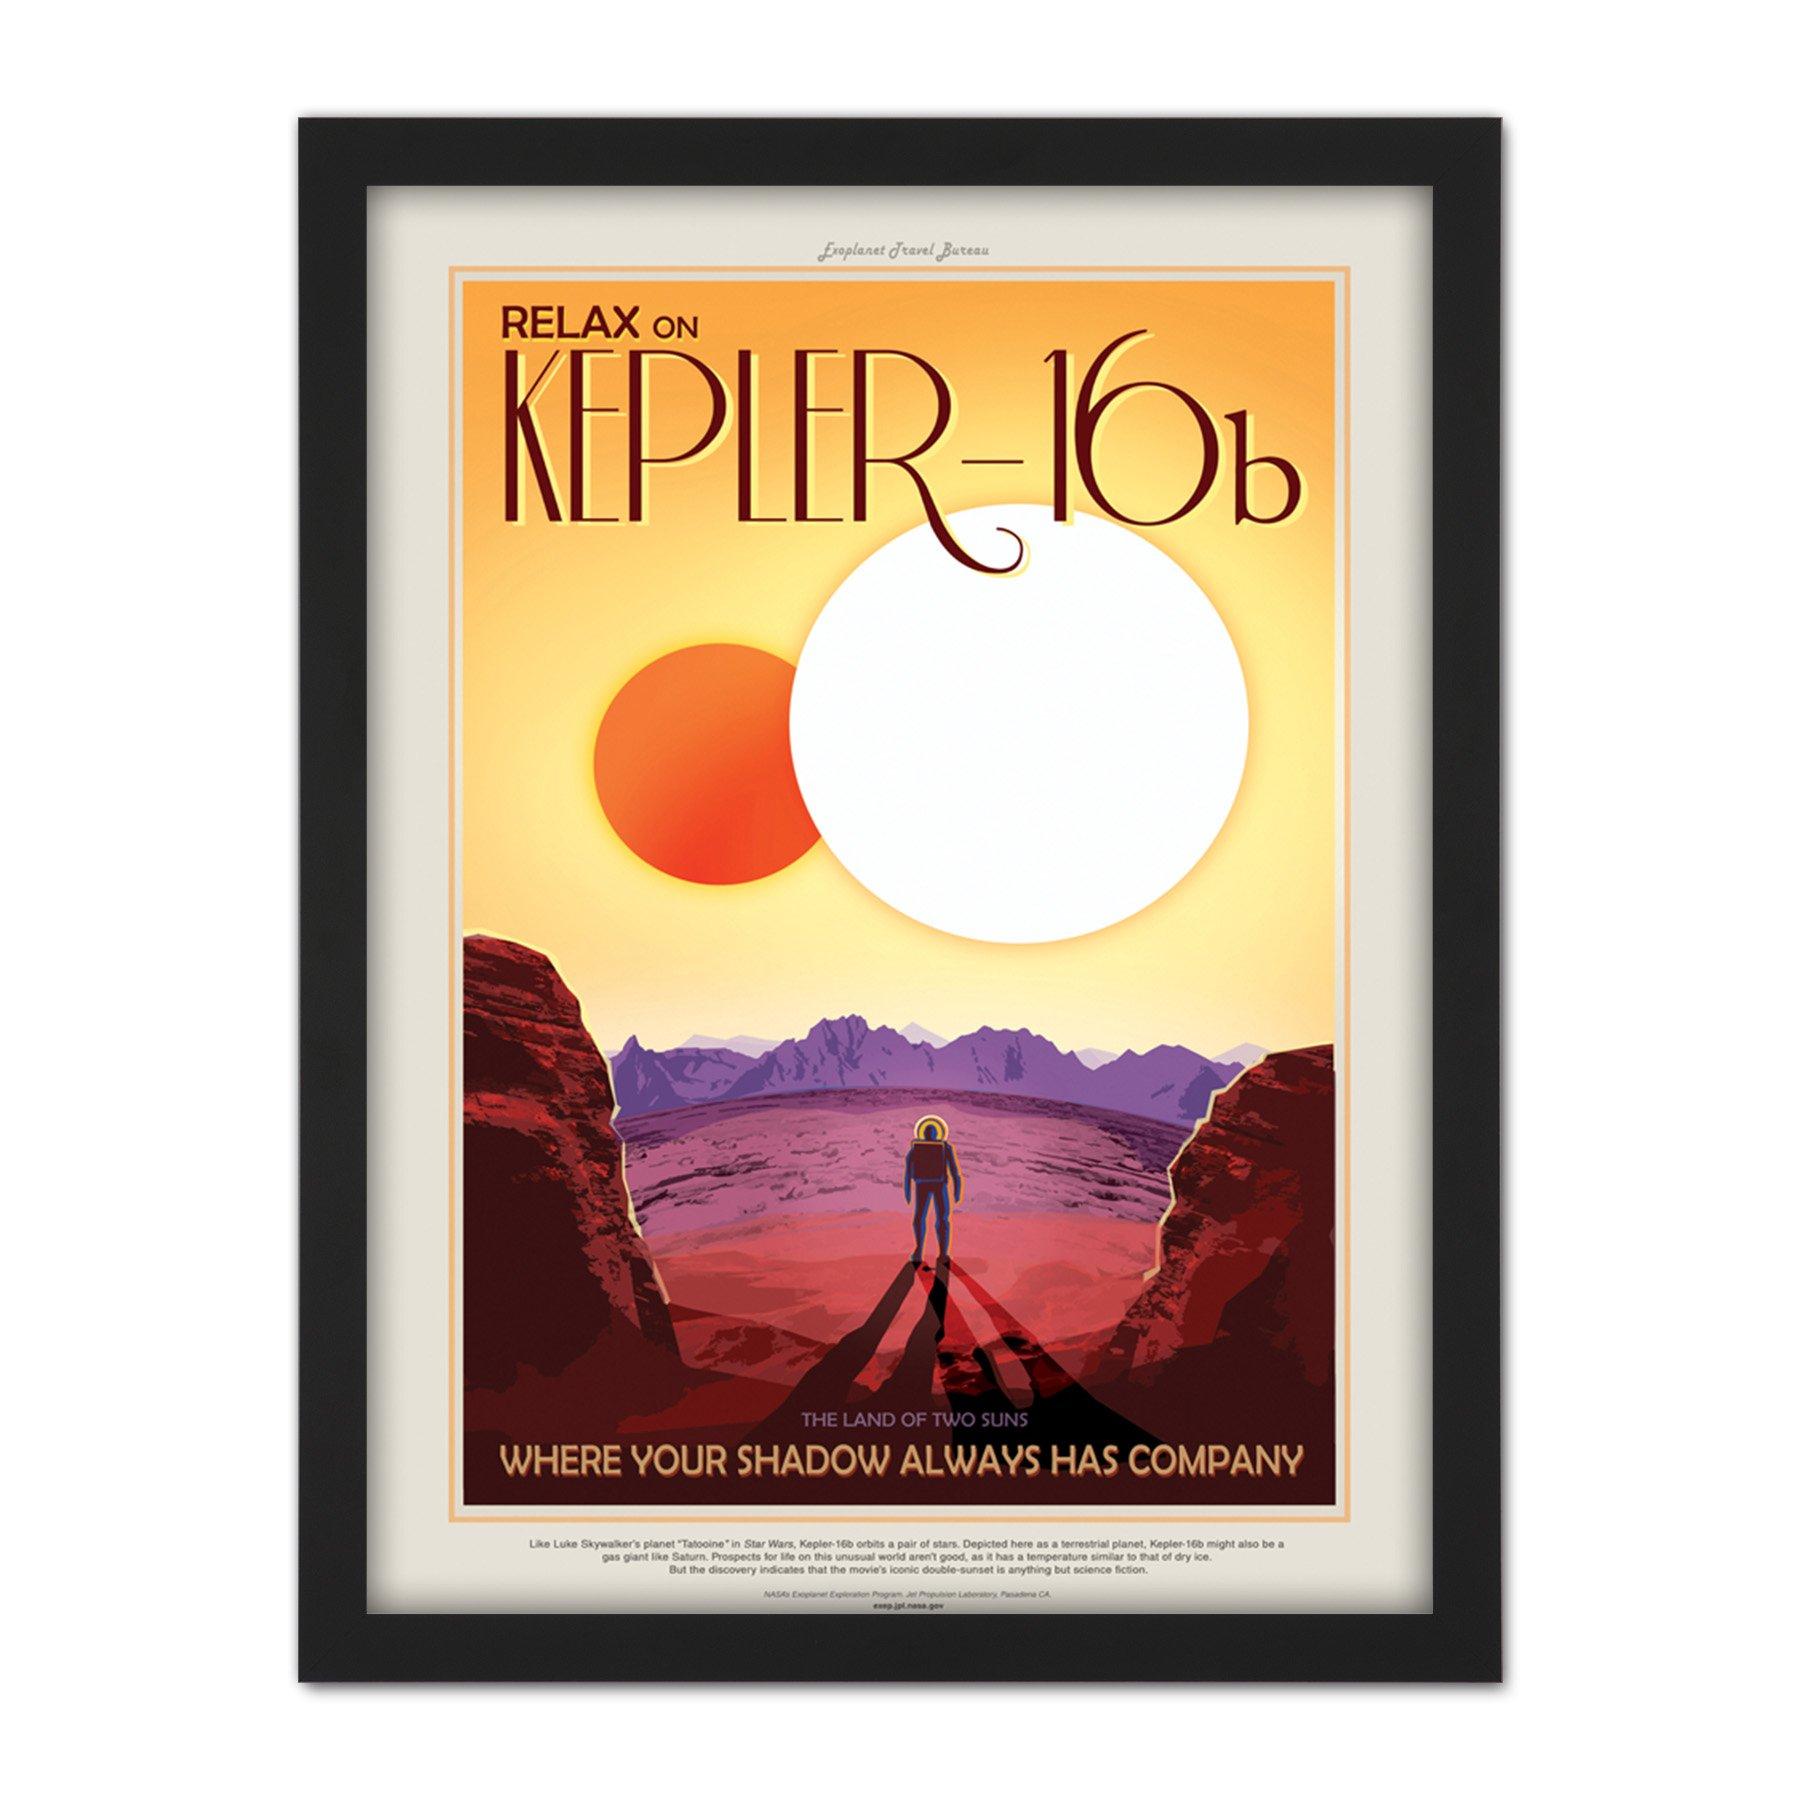 Kepler-16b Relax Land Two Suns NASA Space Tours Travel Large Framed Wall Decor Art Print